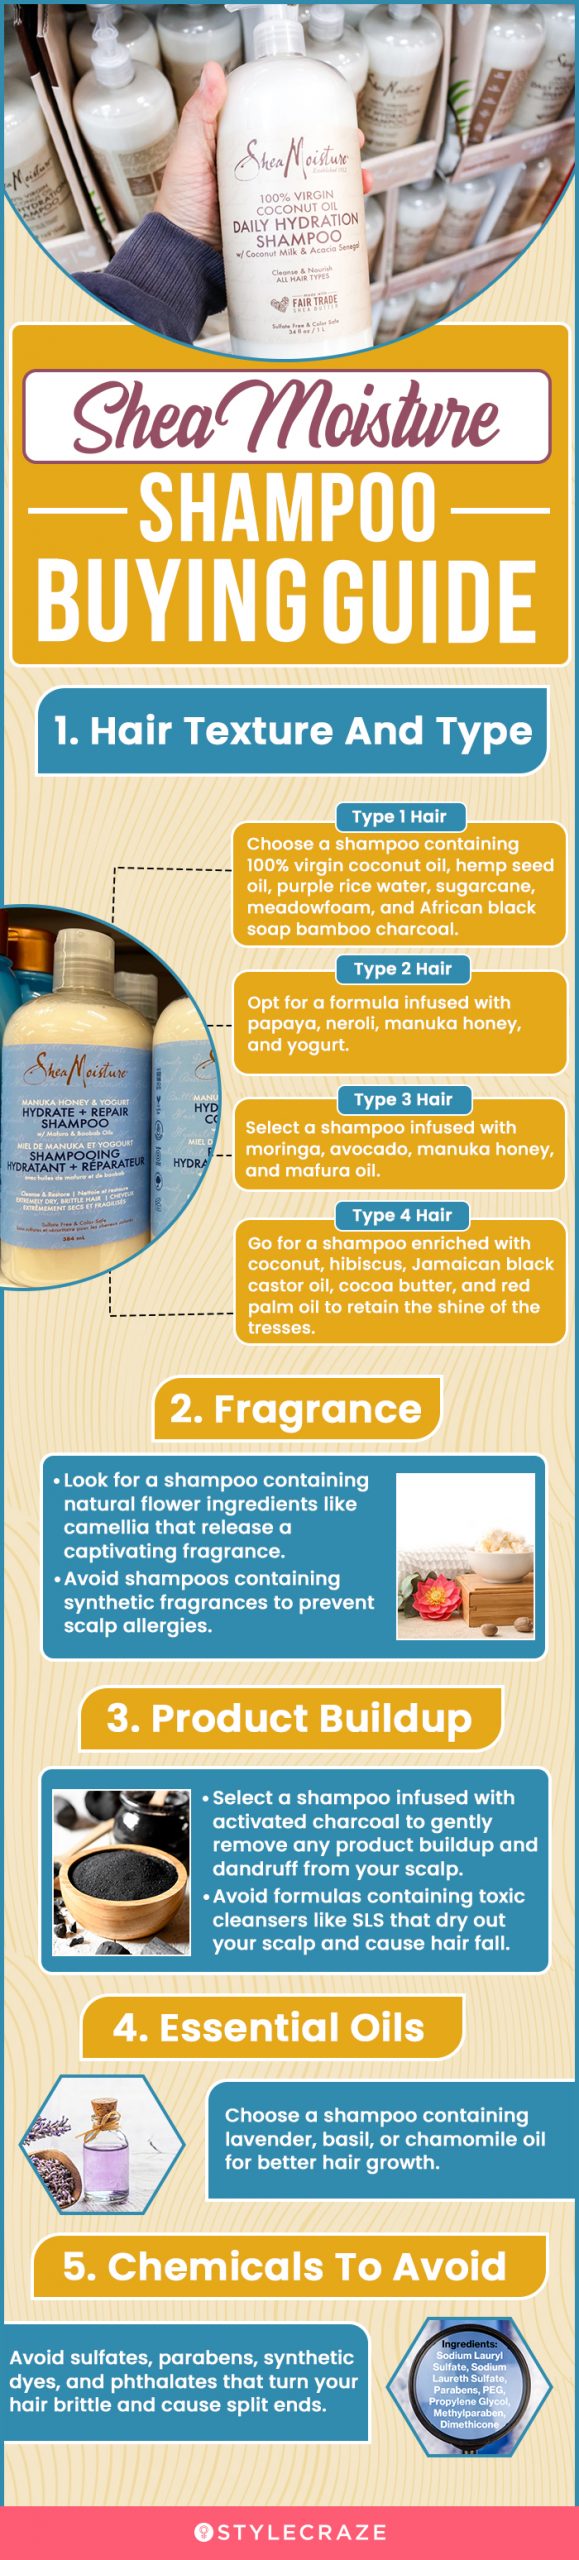 SheaMoisture Shampoo Buying Guide  [infographic]